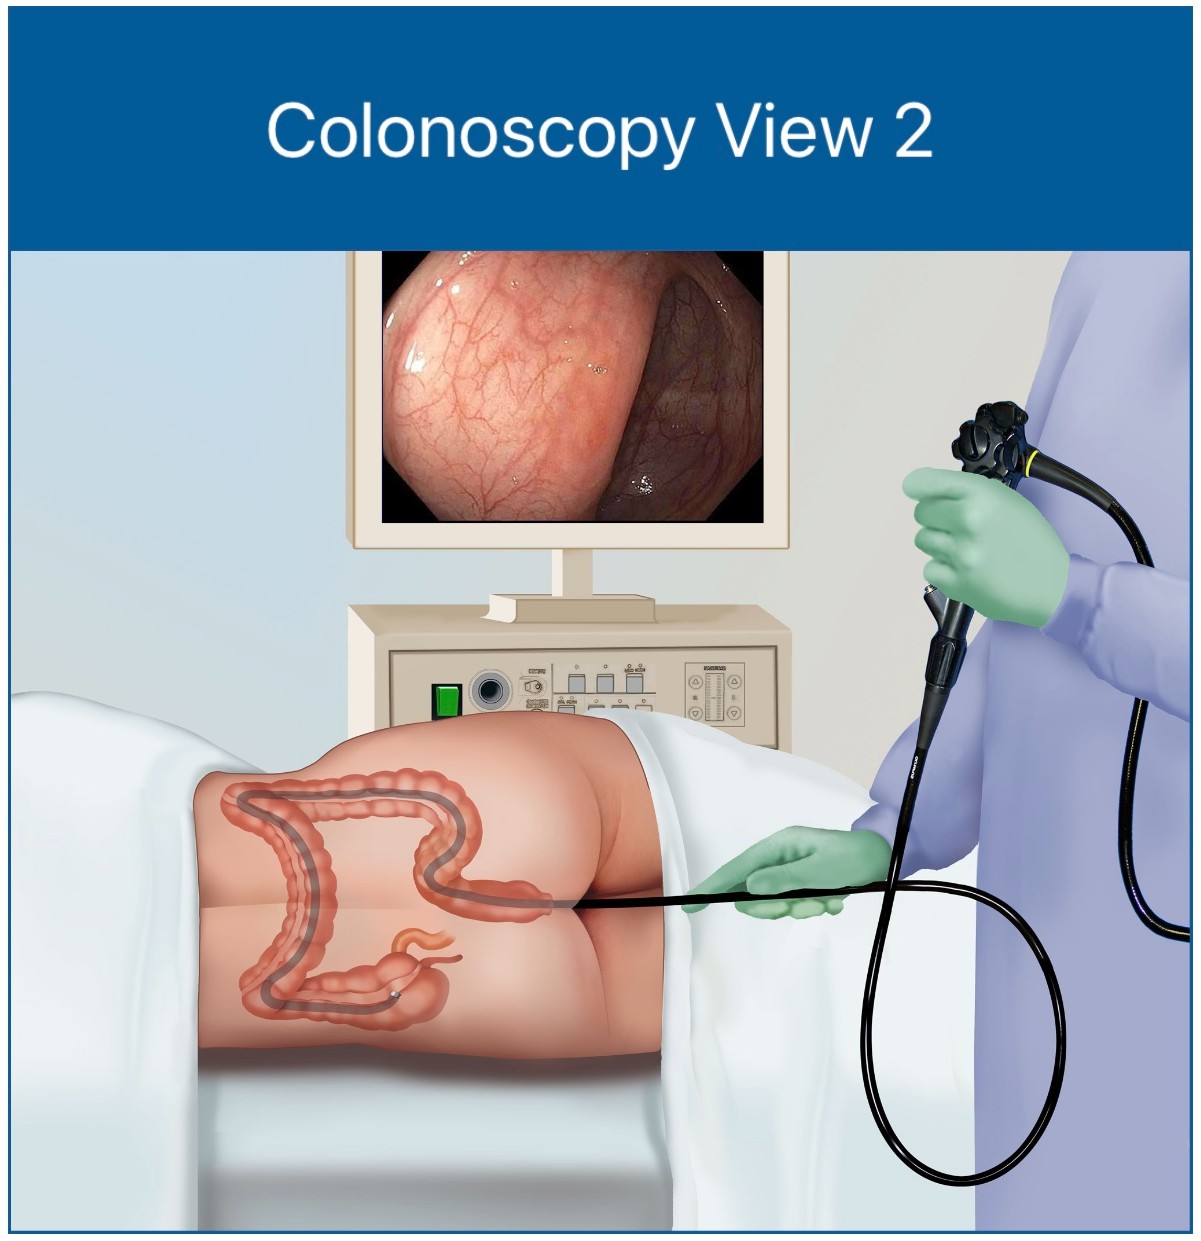 Colonoscopy View 2